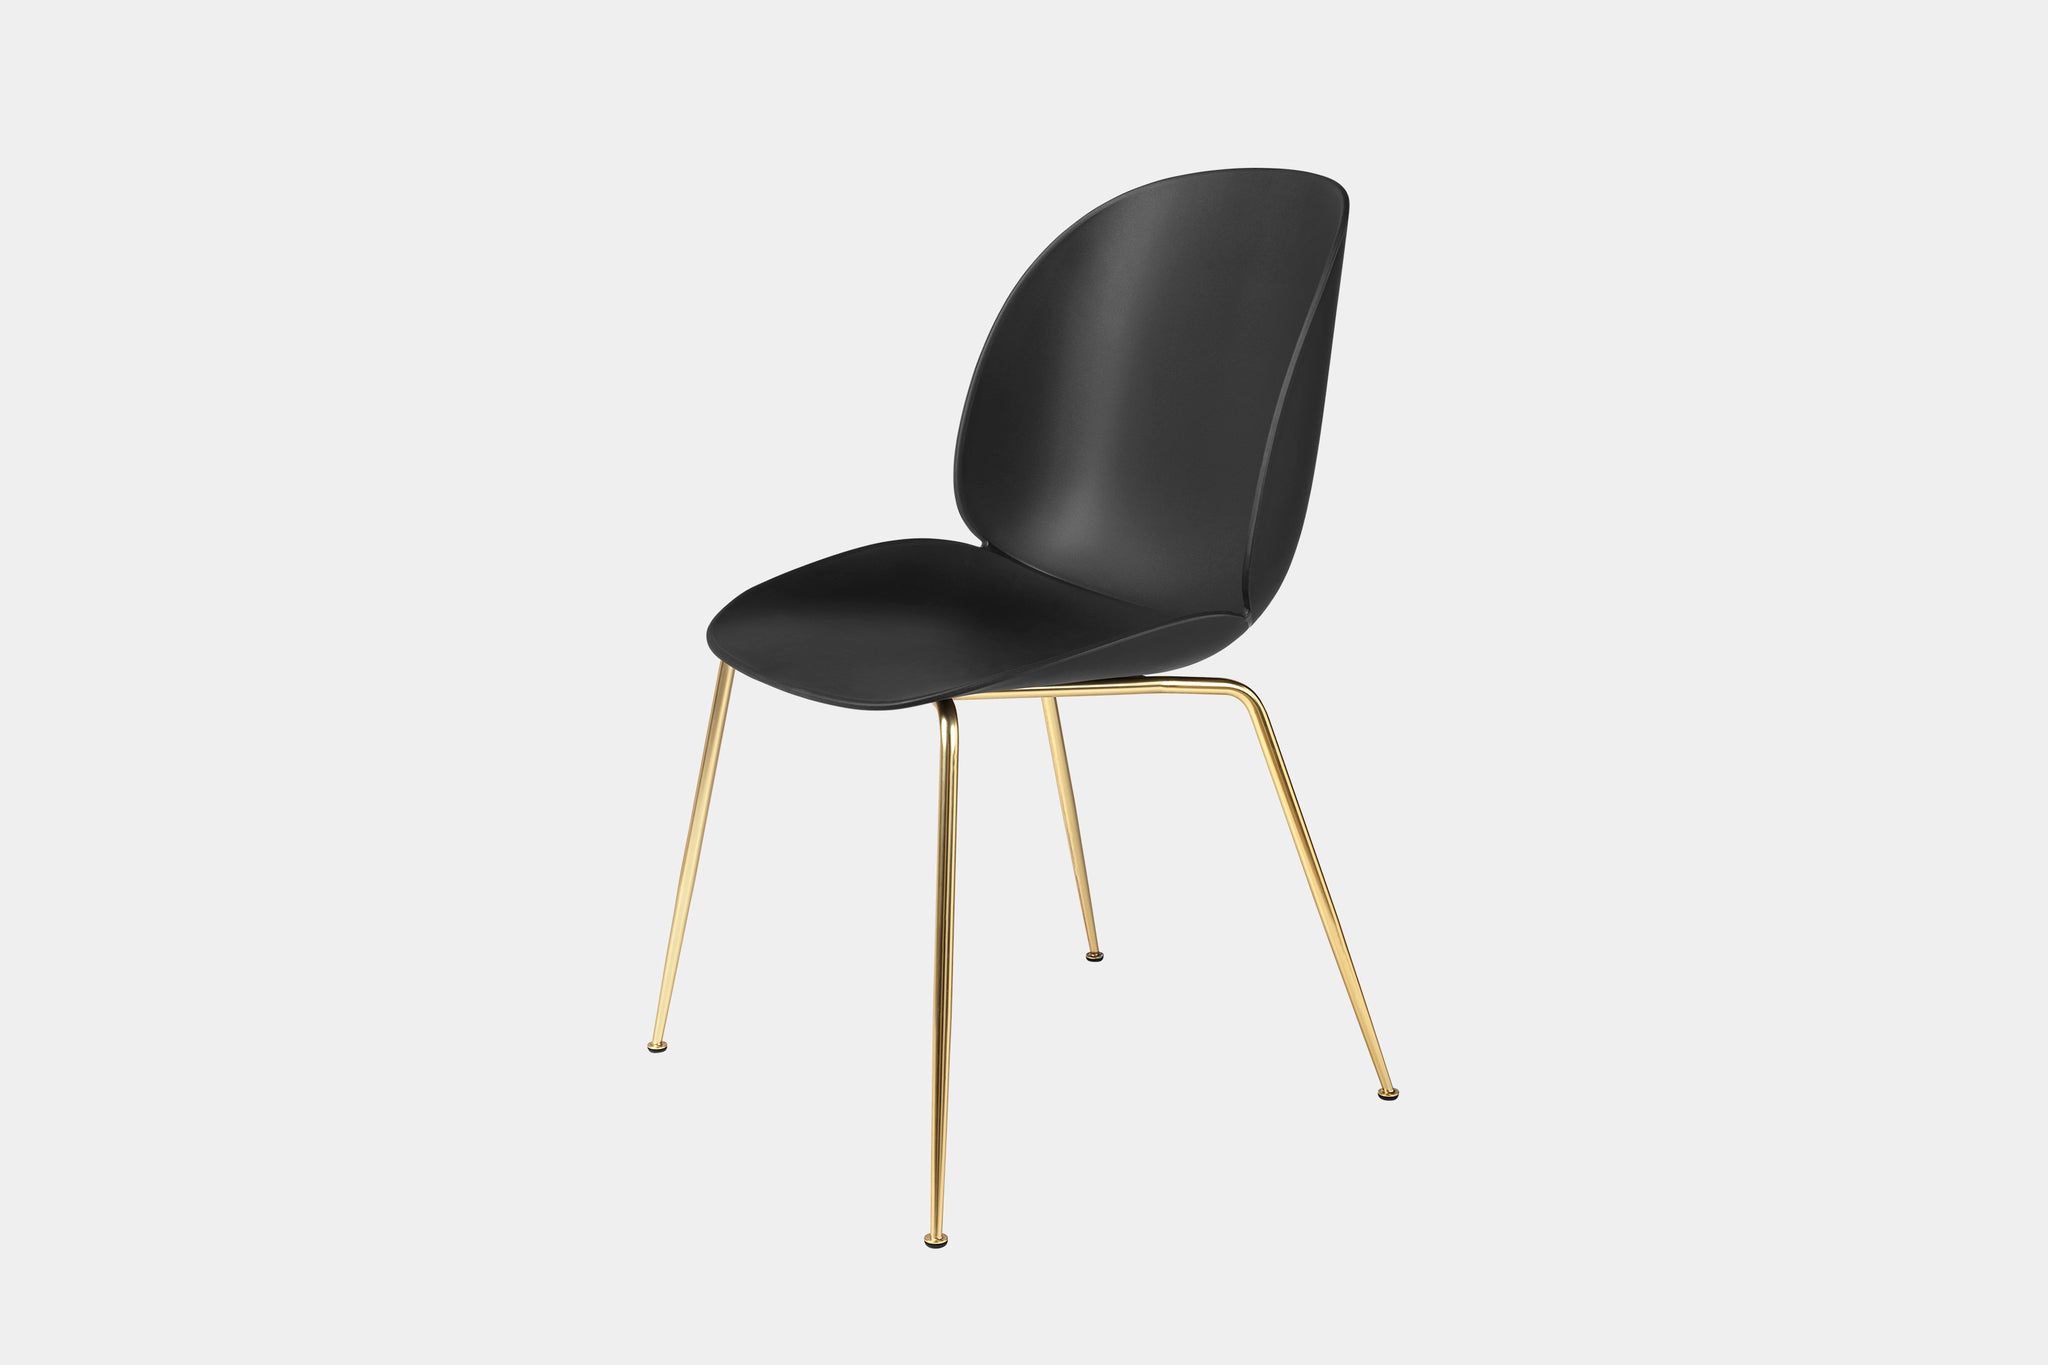 Beetle Chair - un-upholstered, conic base (short leg)